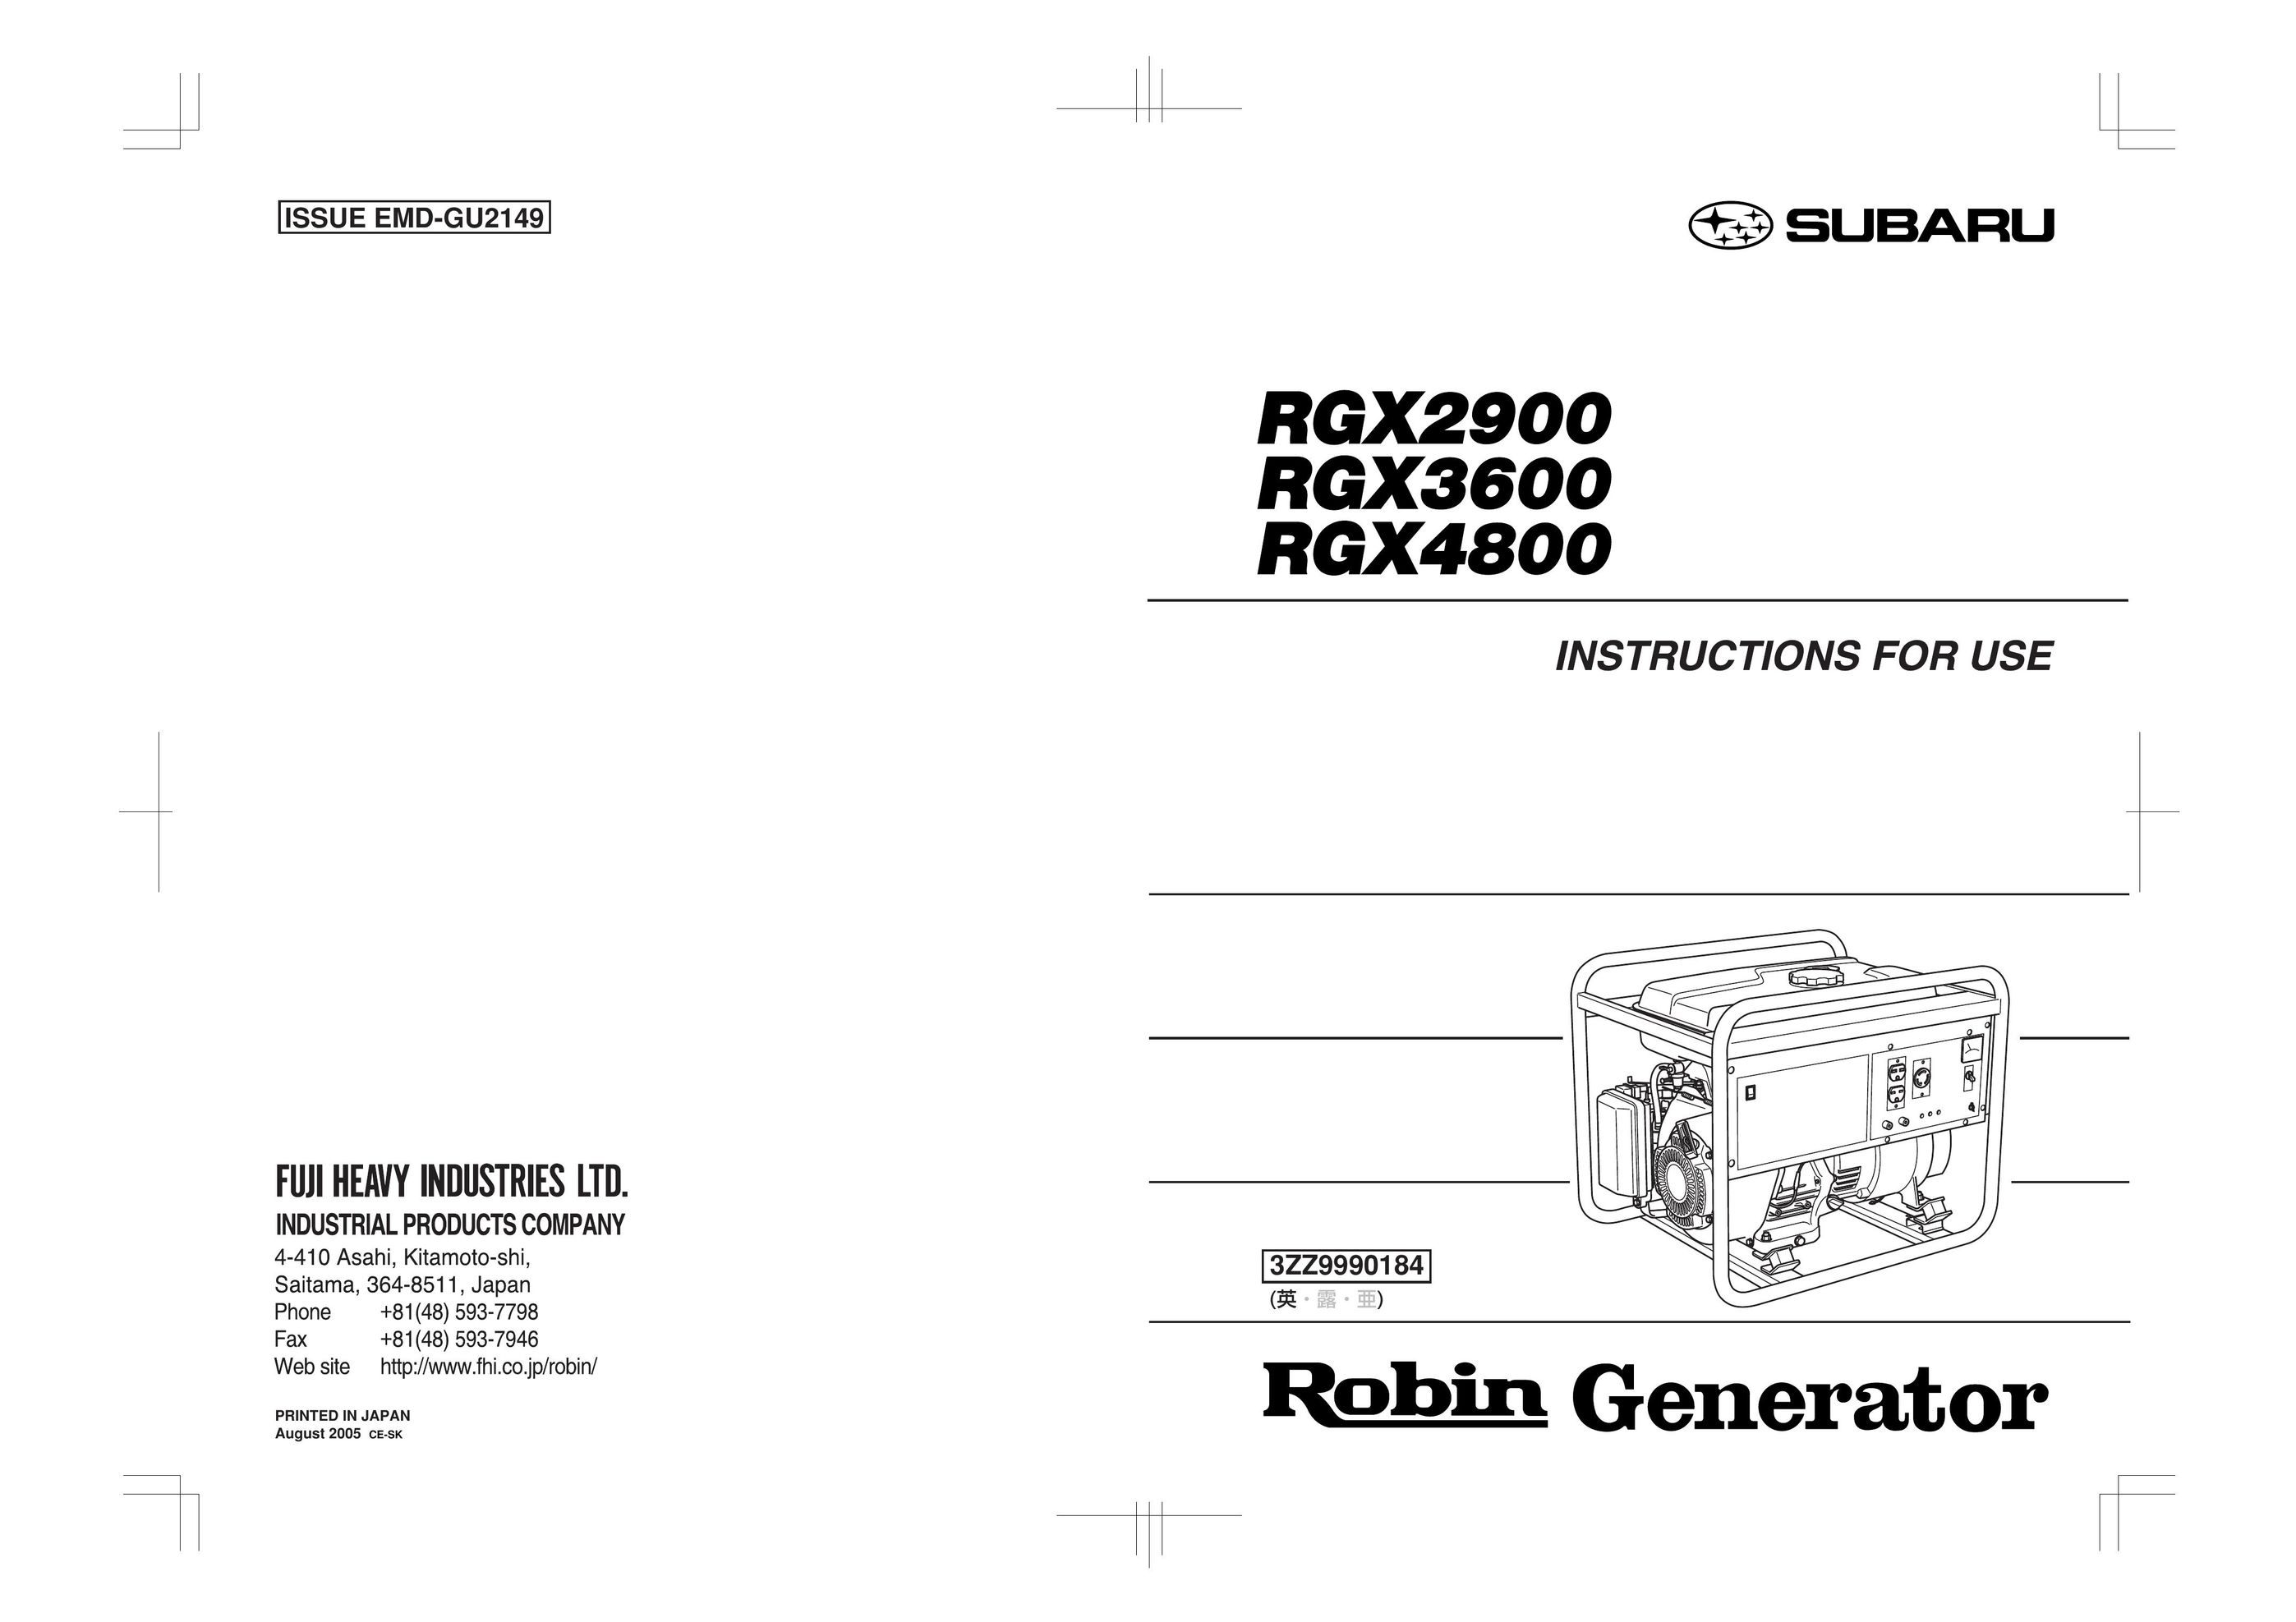 Subaru Robin Power Products RGX2900 Laptop User Manual